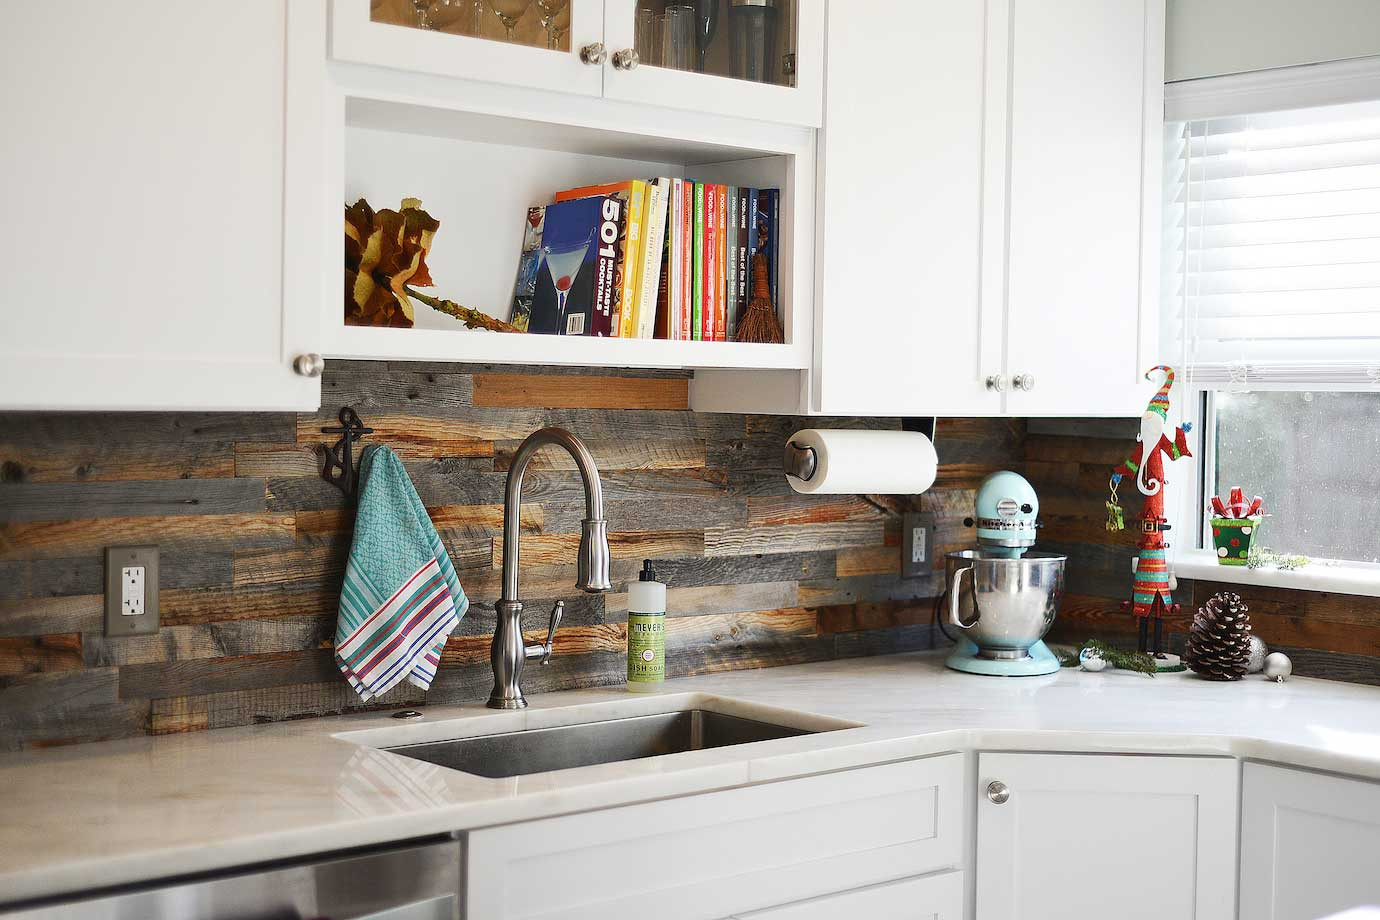 Wood Backsplash Kitchen
 6 Outstanding Kitchen Backsplash Ideas That Make You Feel